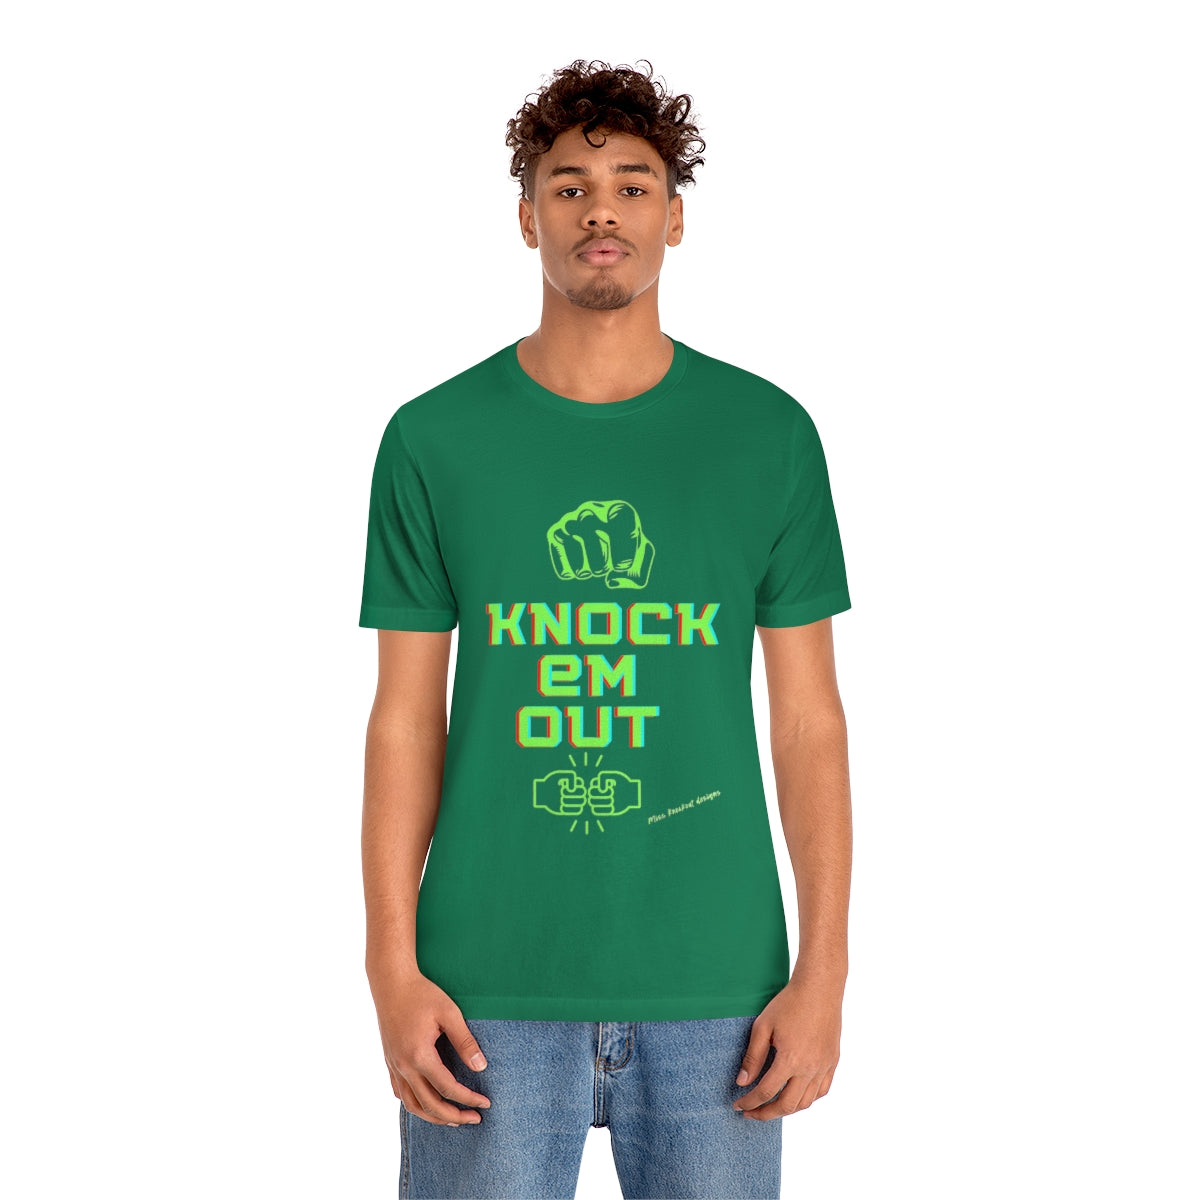 Knock em out Unisex Jersey Short Sleeve Tee Miss knockout ™ Merchandise